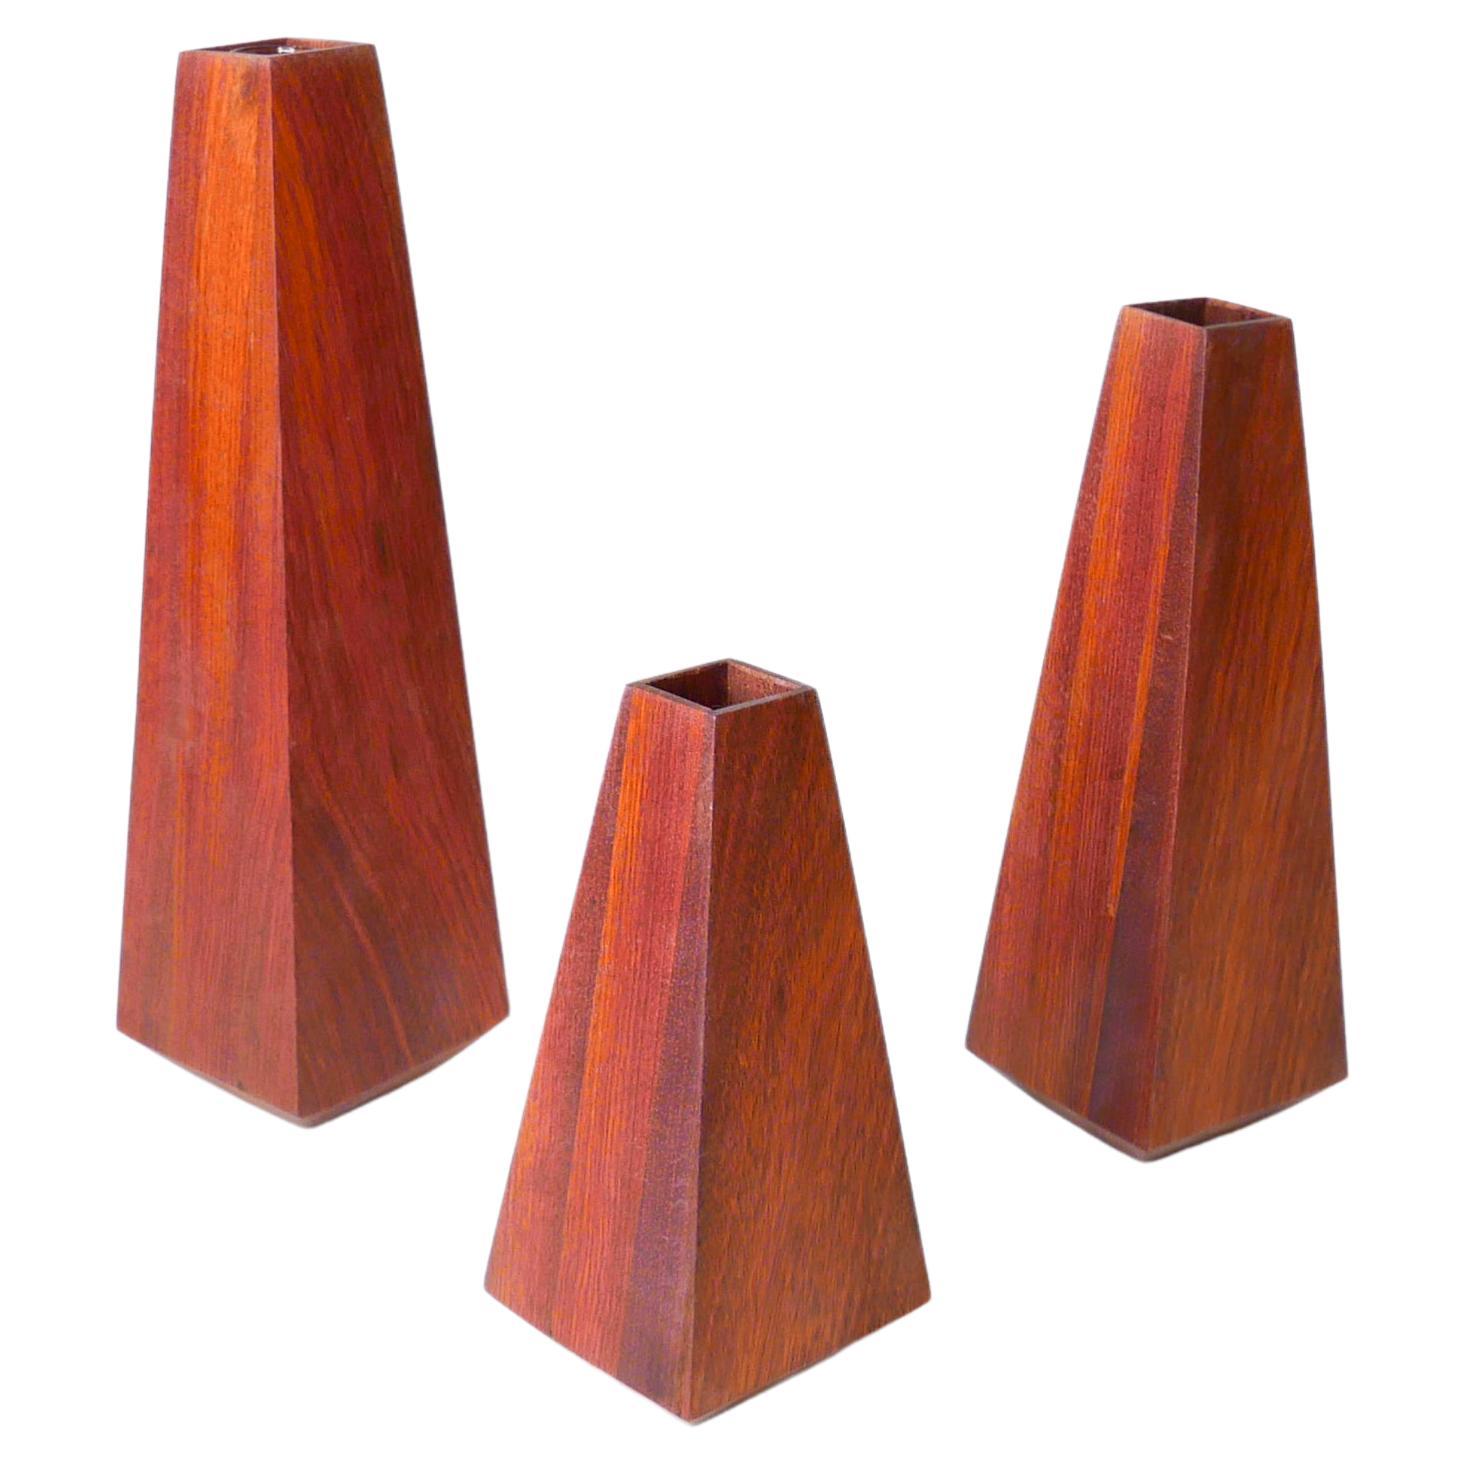 'Picos' Minimalist Set of Wooden Vases in Brazilian Hardwood by Knót Artesanal For Sale